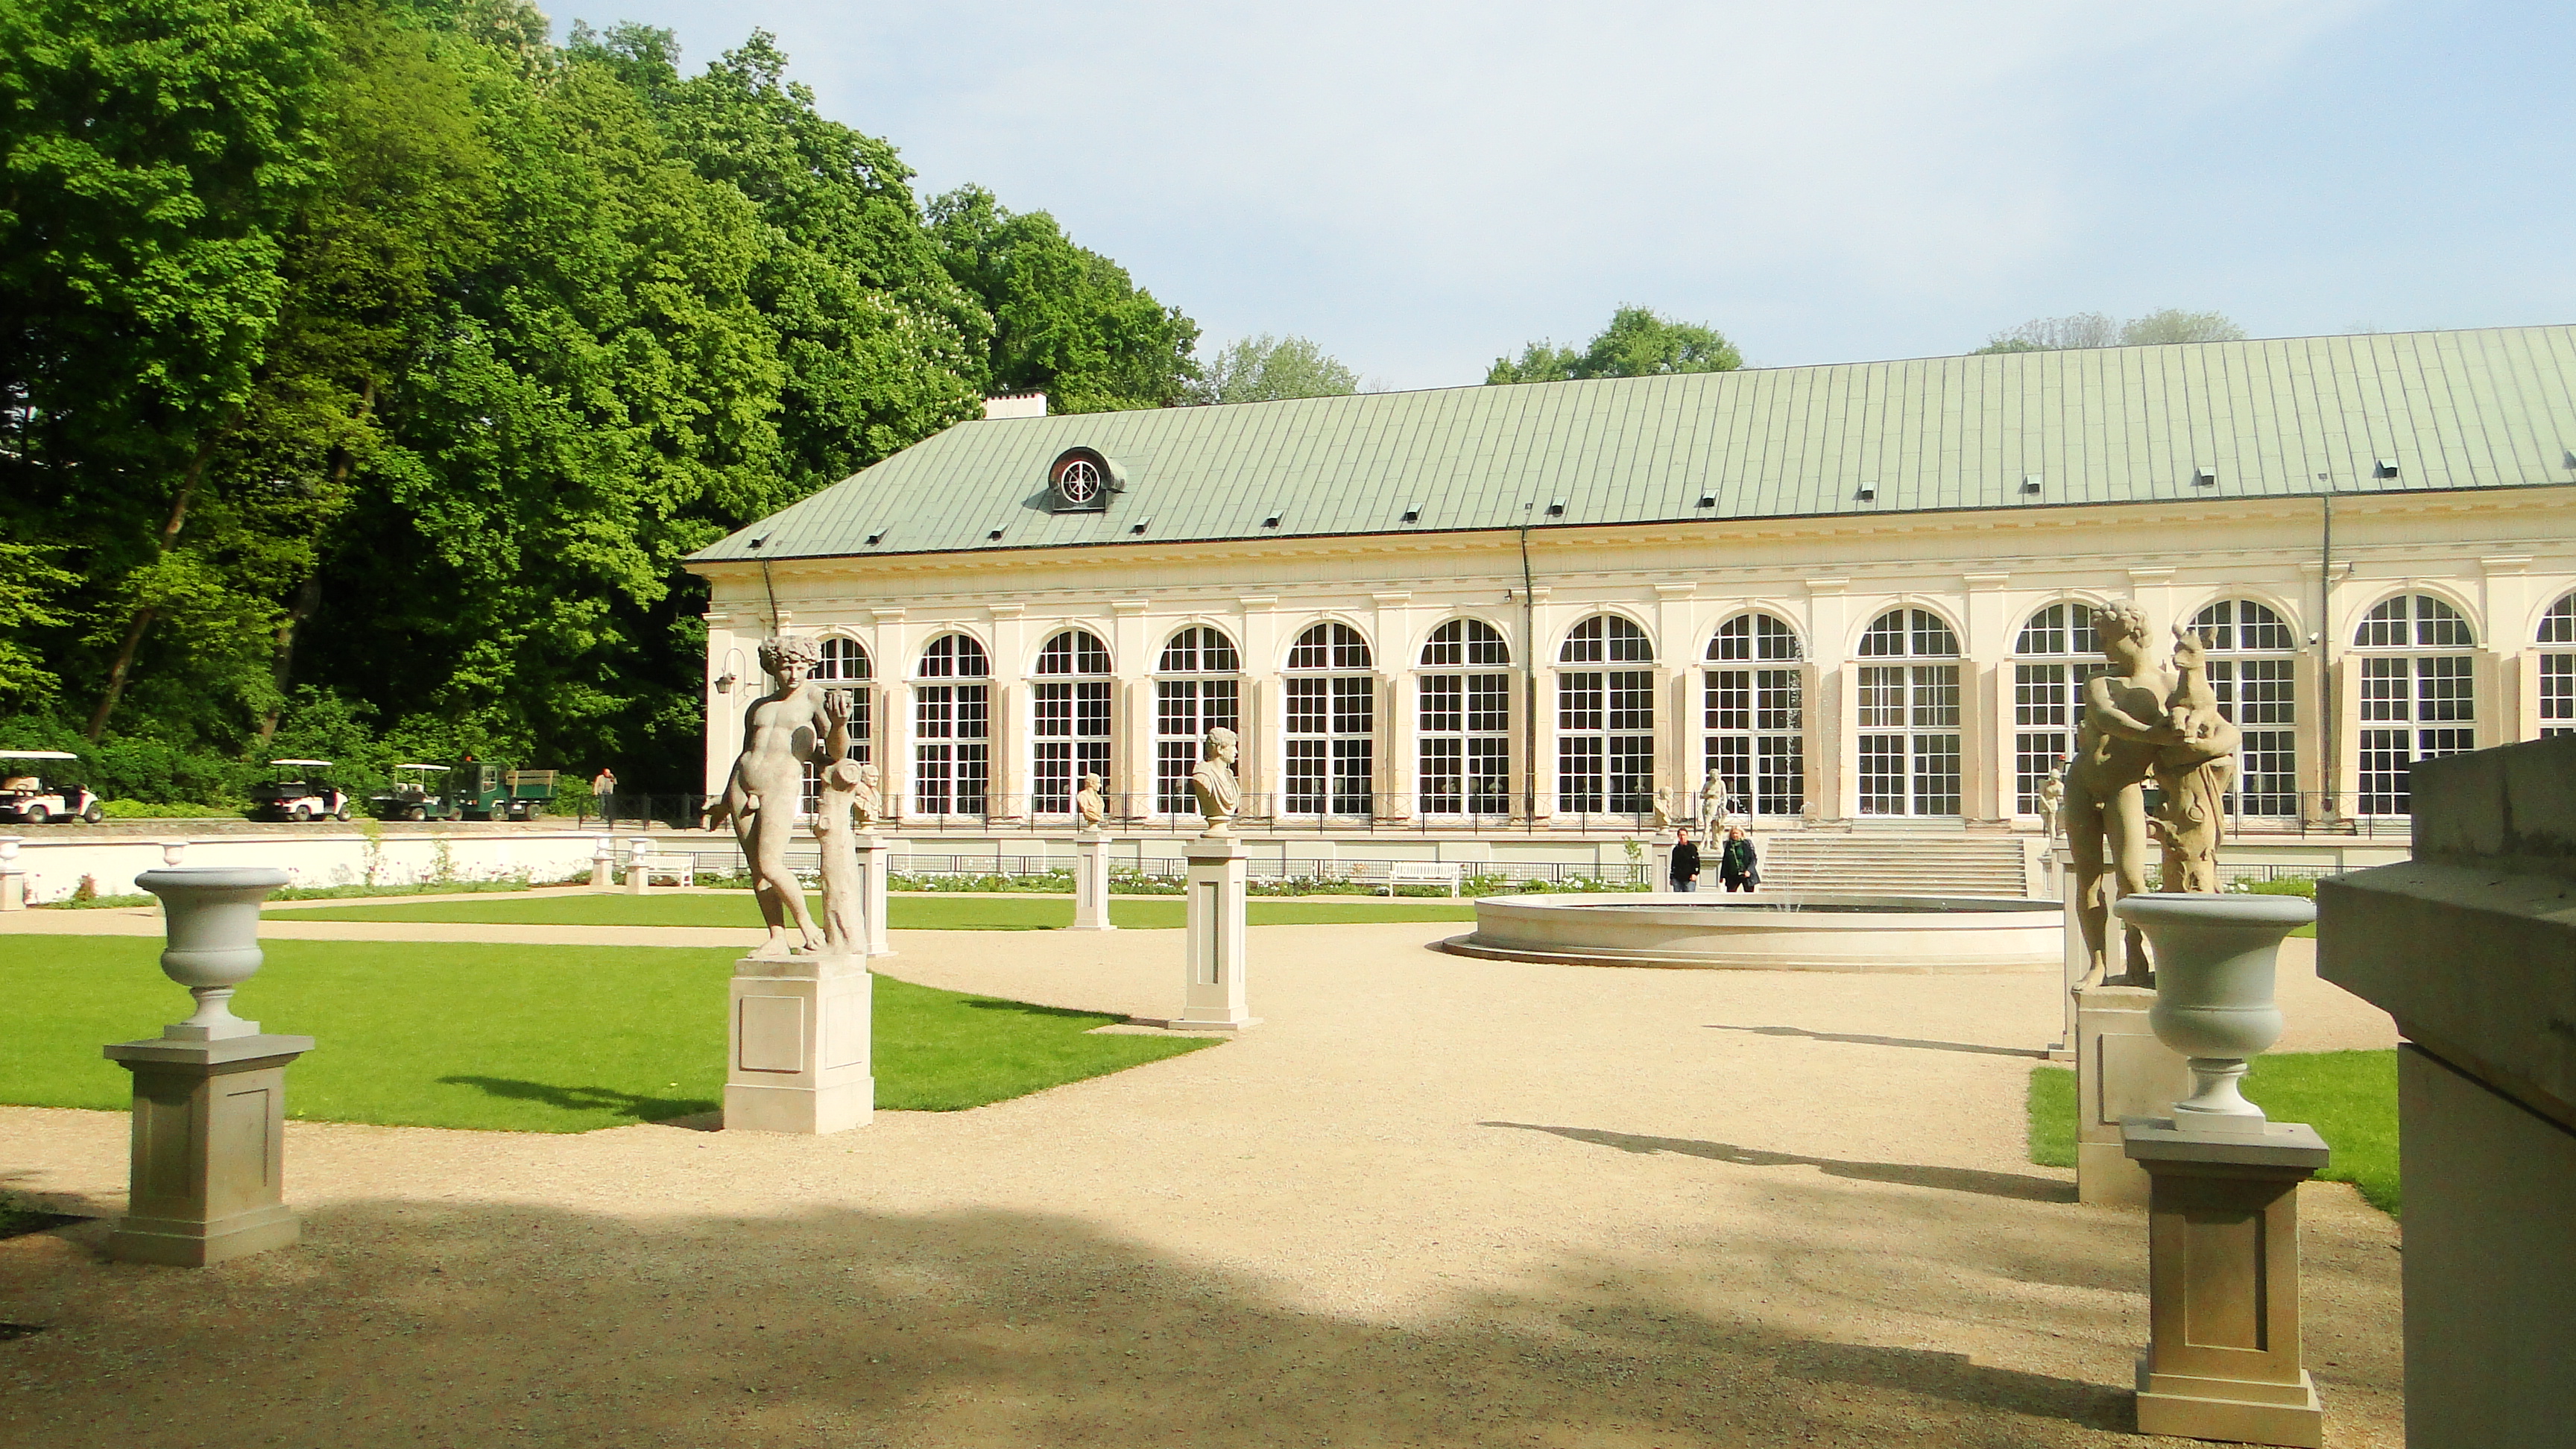 File:Old Orangery in Łazienki (Warsaw).jpg - Wikimedia Commons